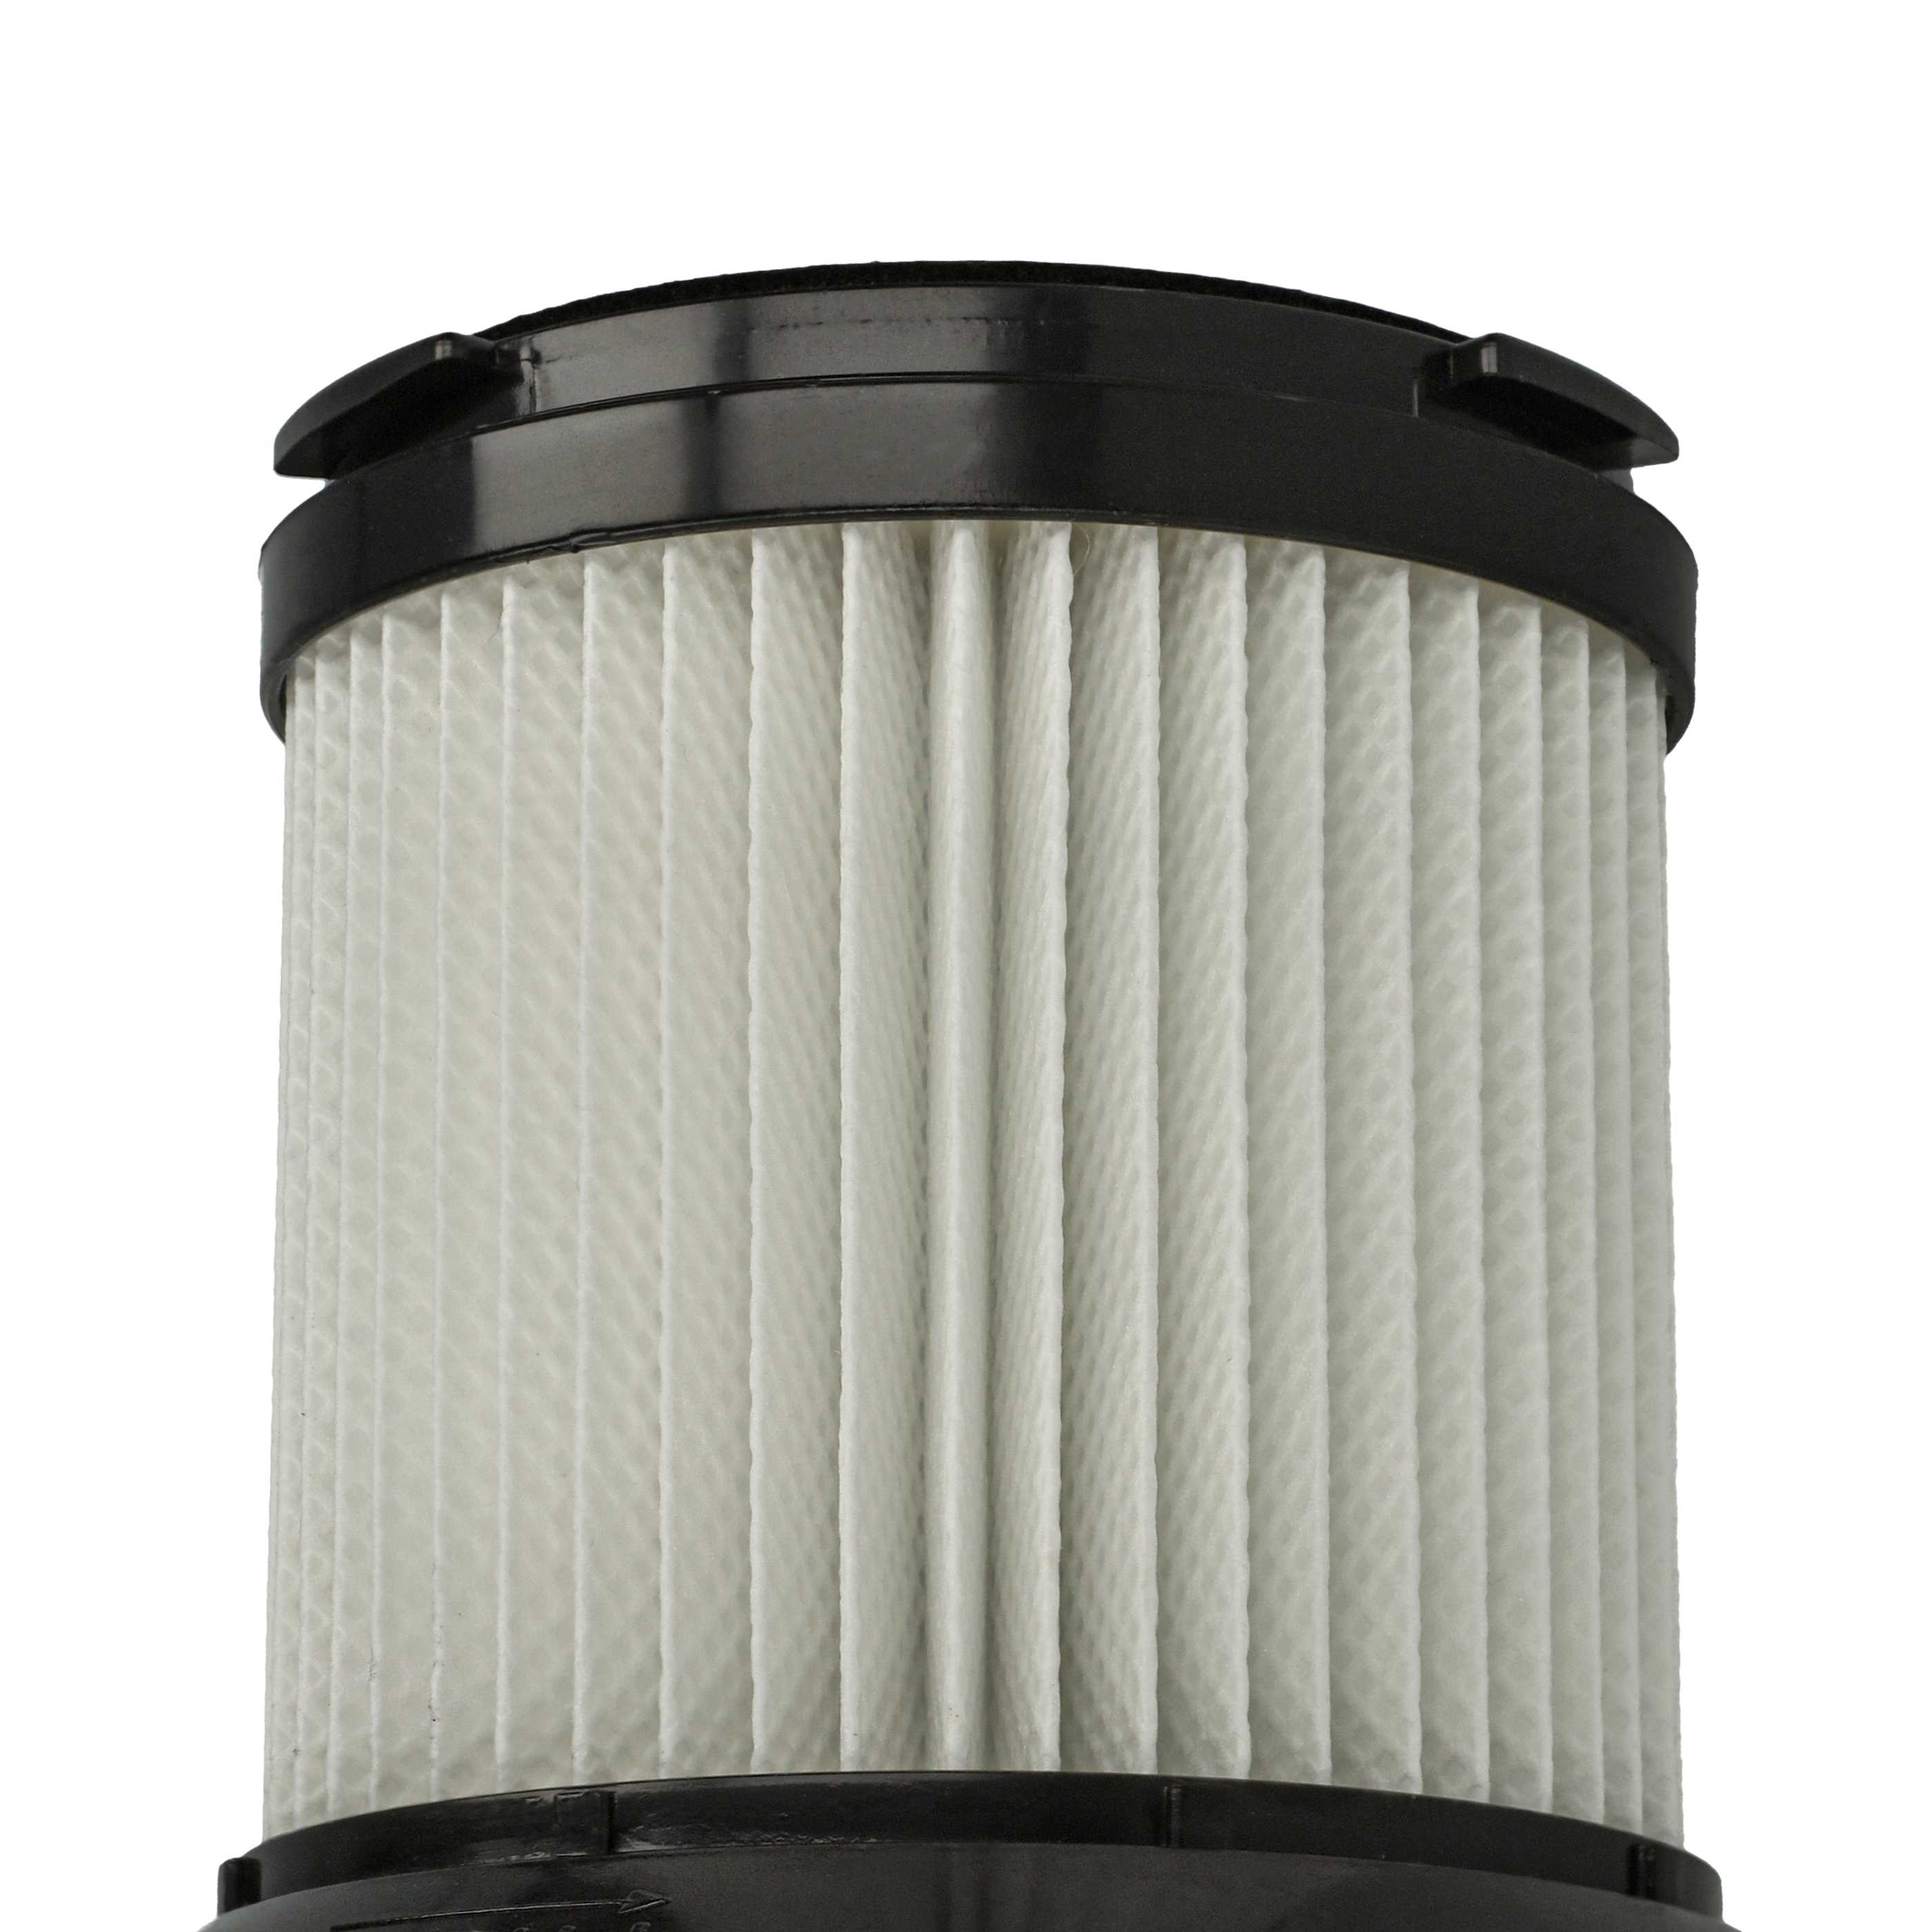 2x HEPA filter suitable for Sichler Zyklon BLS-200 Vacuum Cleaner